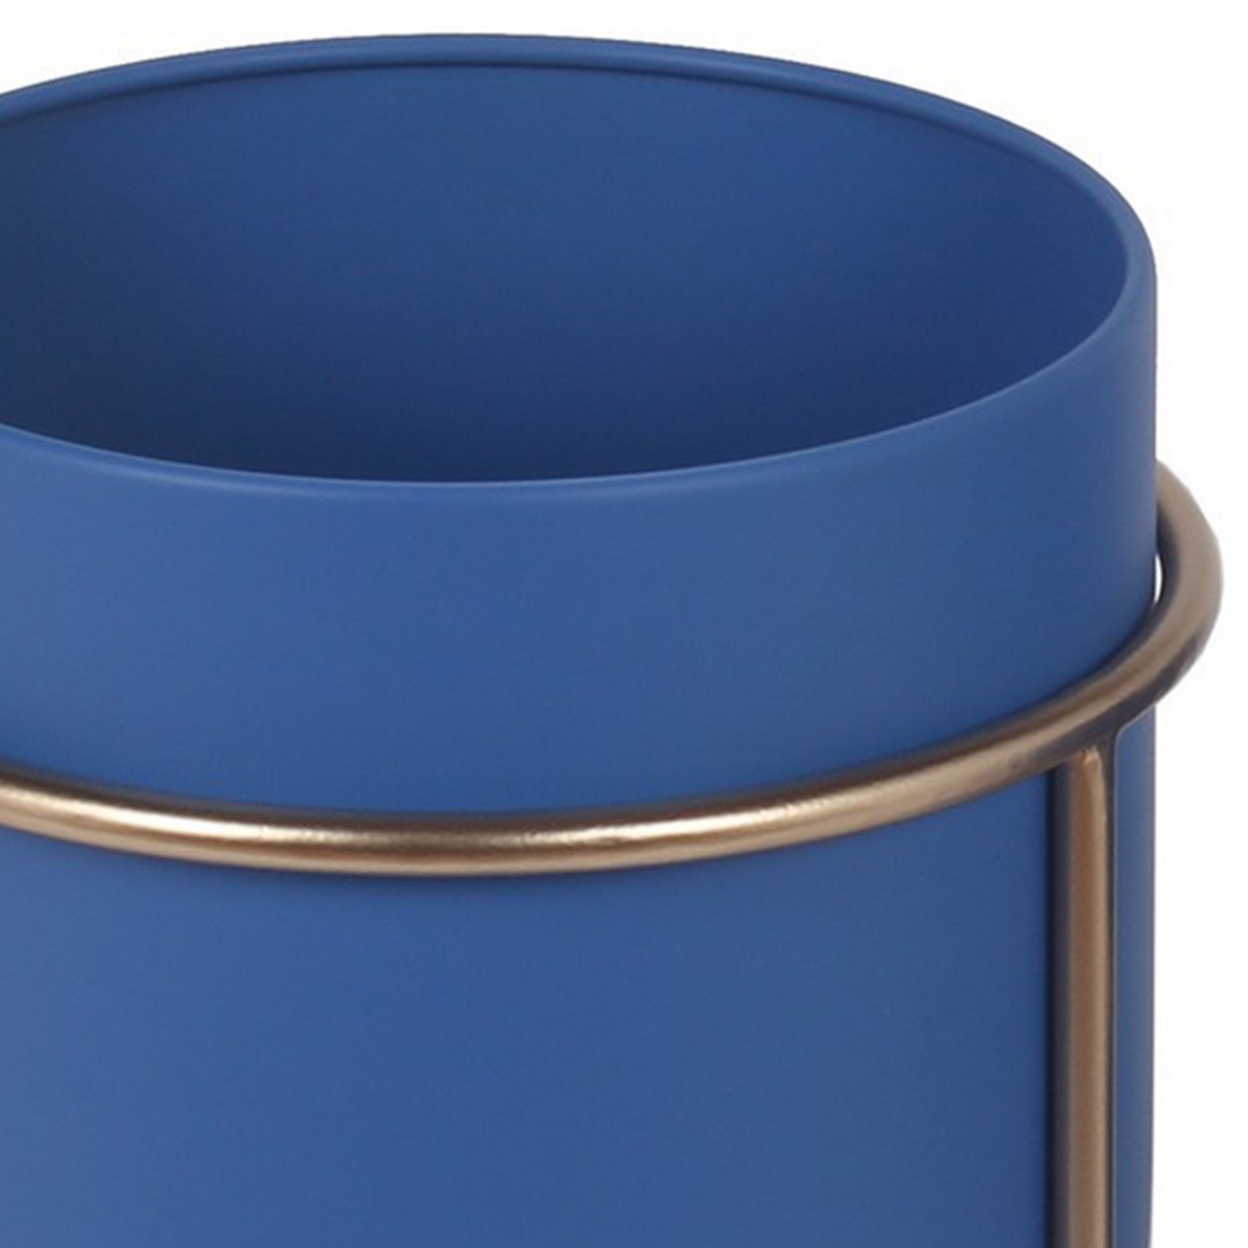 Round Planter With Metal Frame Base, Set Of 2, Blue And Gold- Saltoro Sherpi